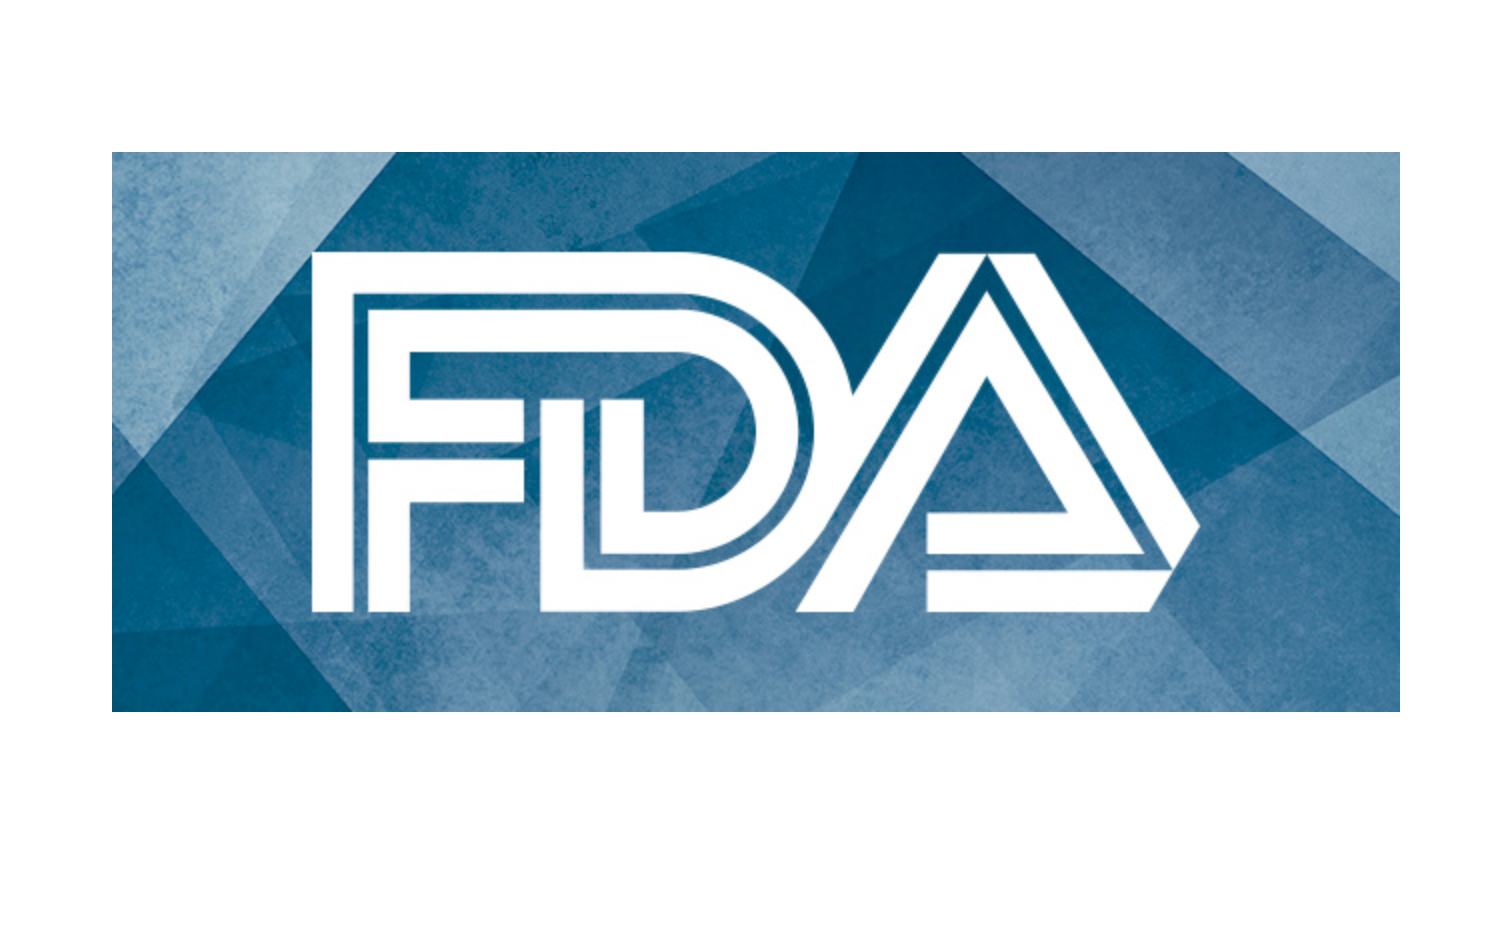 FDA Grants Breakthrough Designation to Merck's Investigational Pneumococcal Conjugate Vaccine Candidate